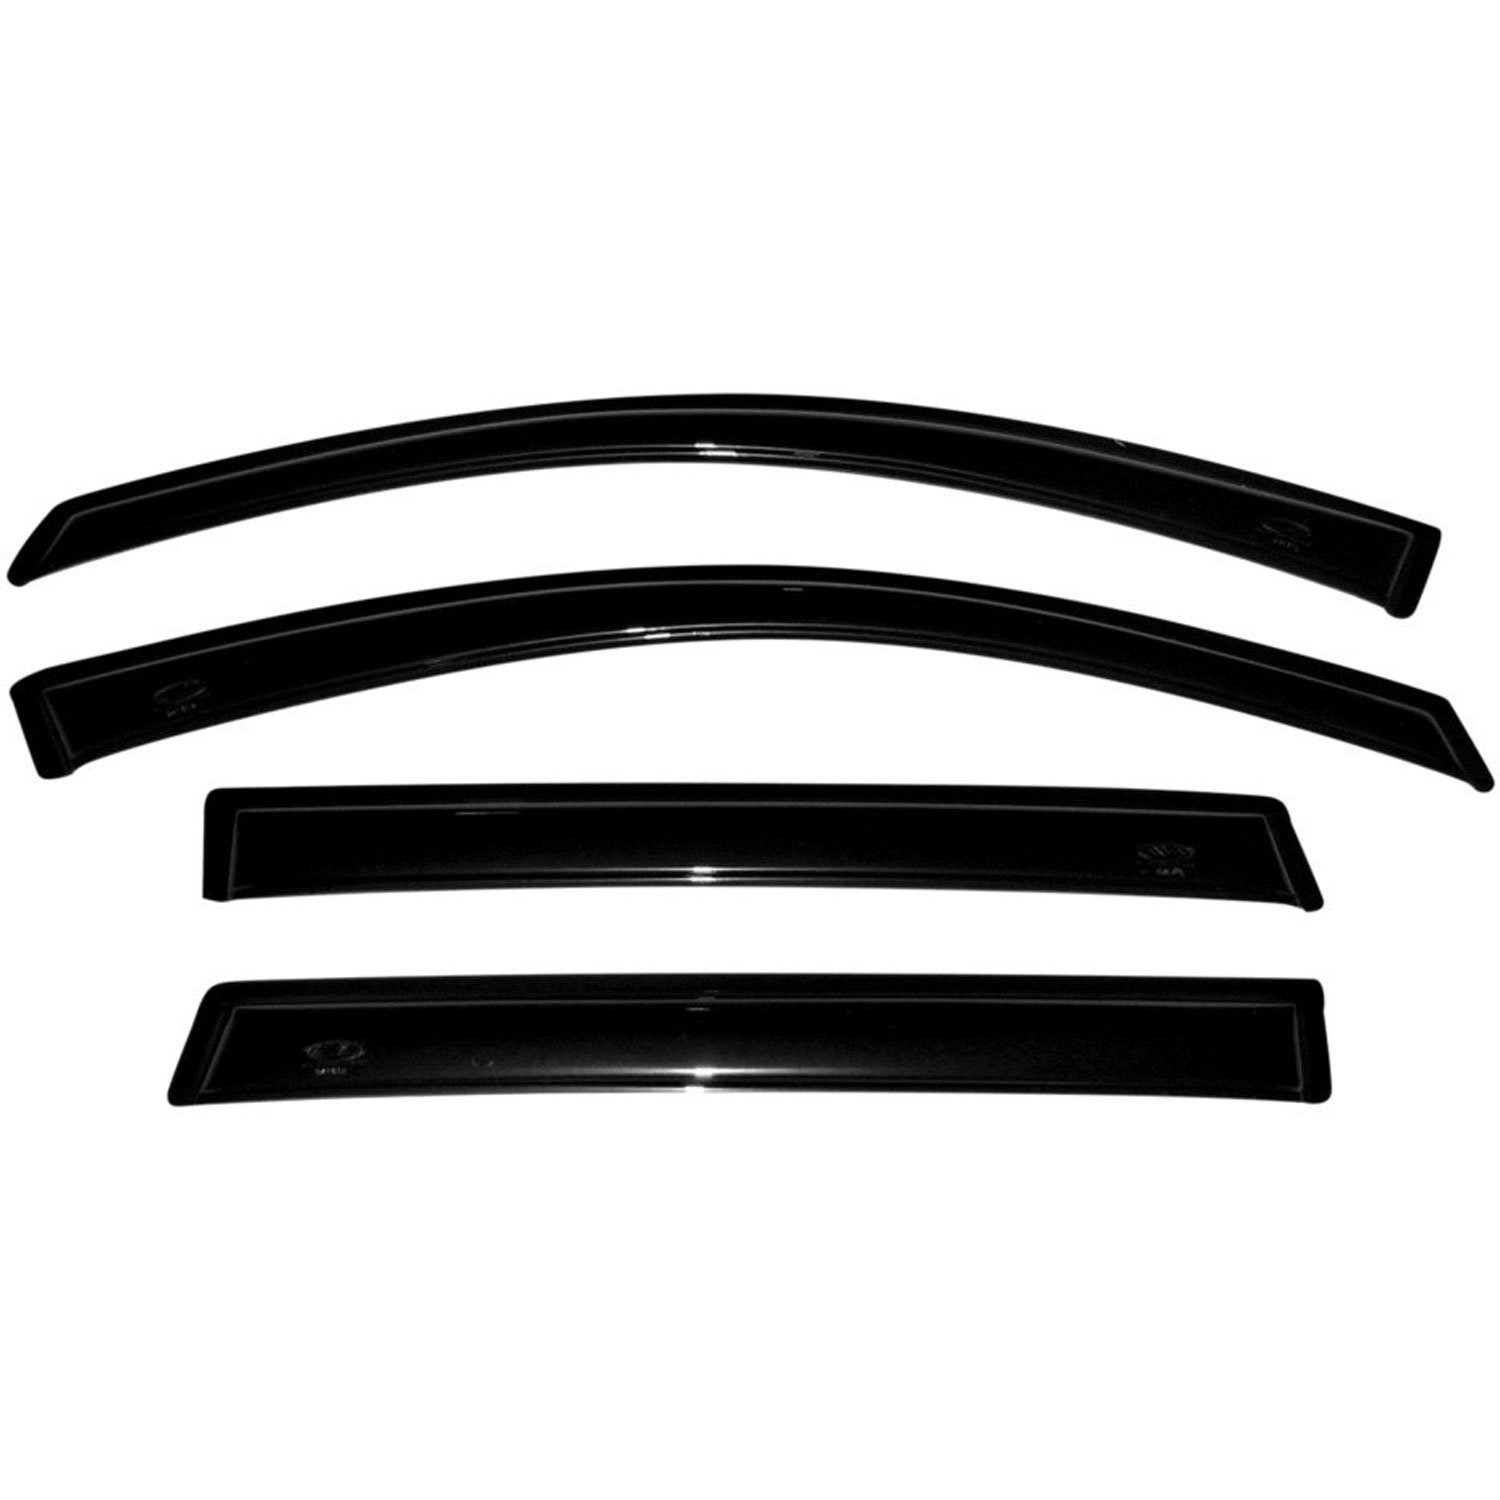 Tape-On Side Window Deflectors for 2016-2017 Chevy Malibu